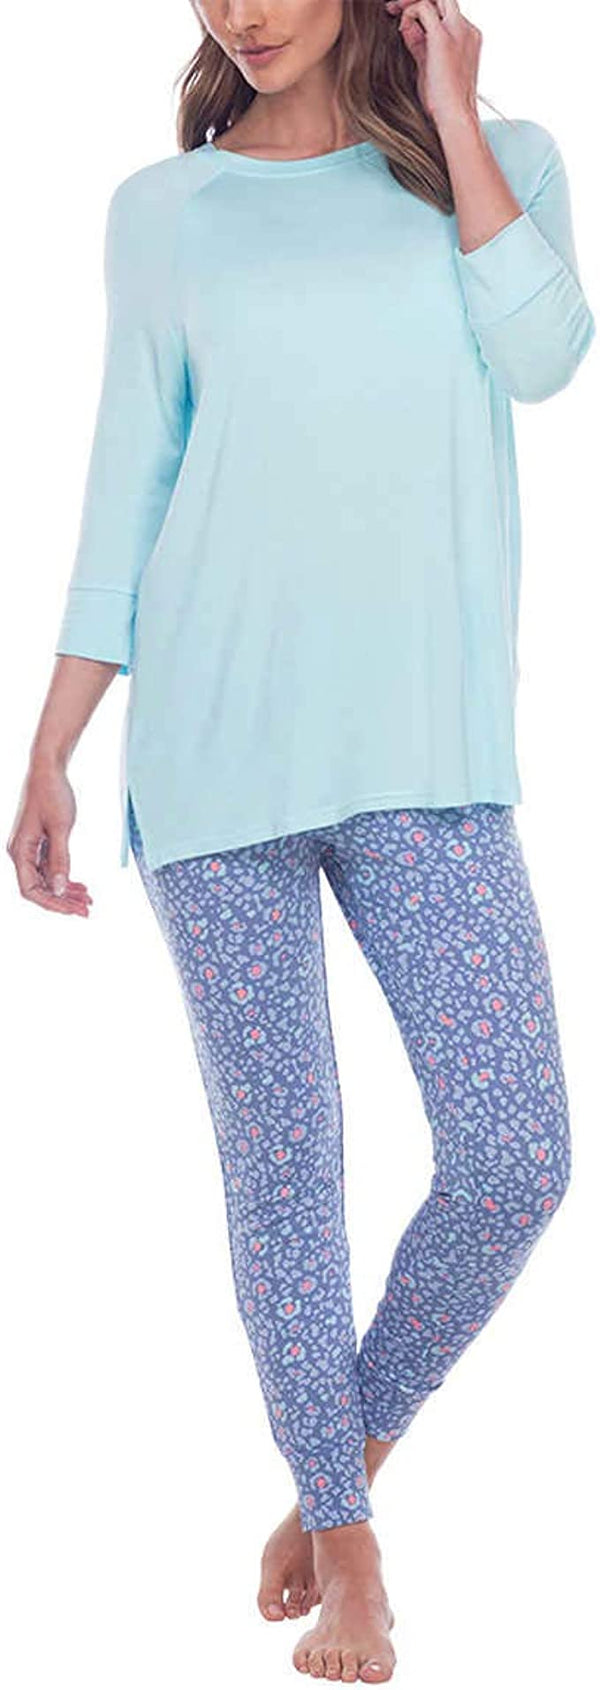 Honeydew Womens Solid Pajama Top,Aqua,Small